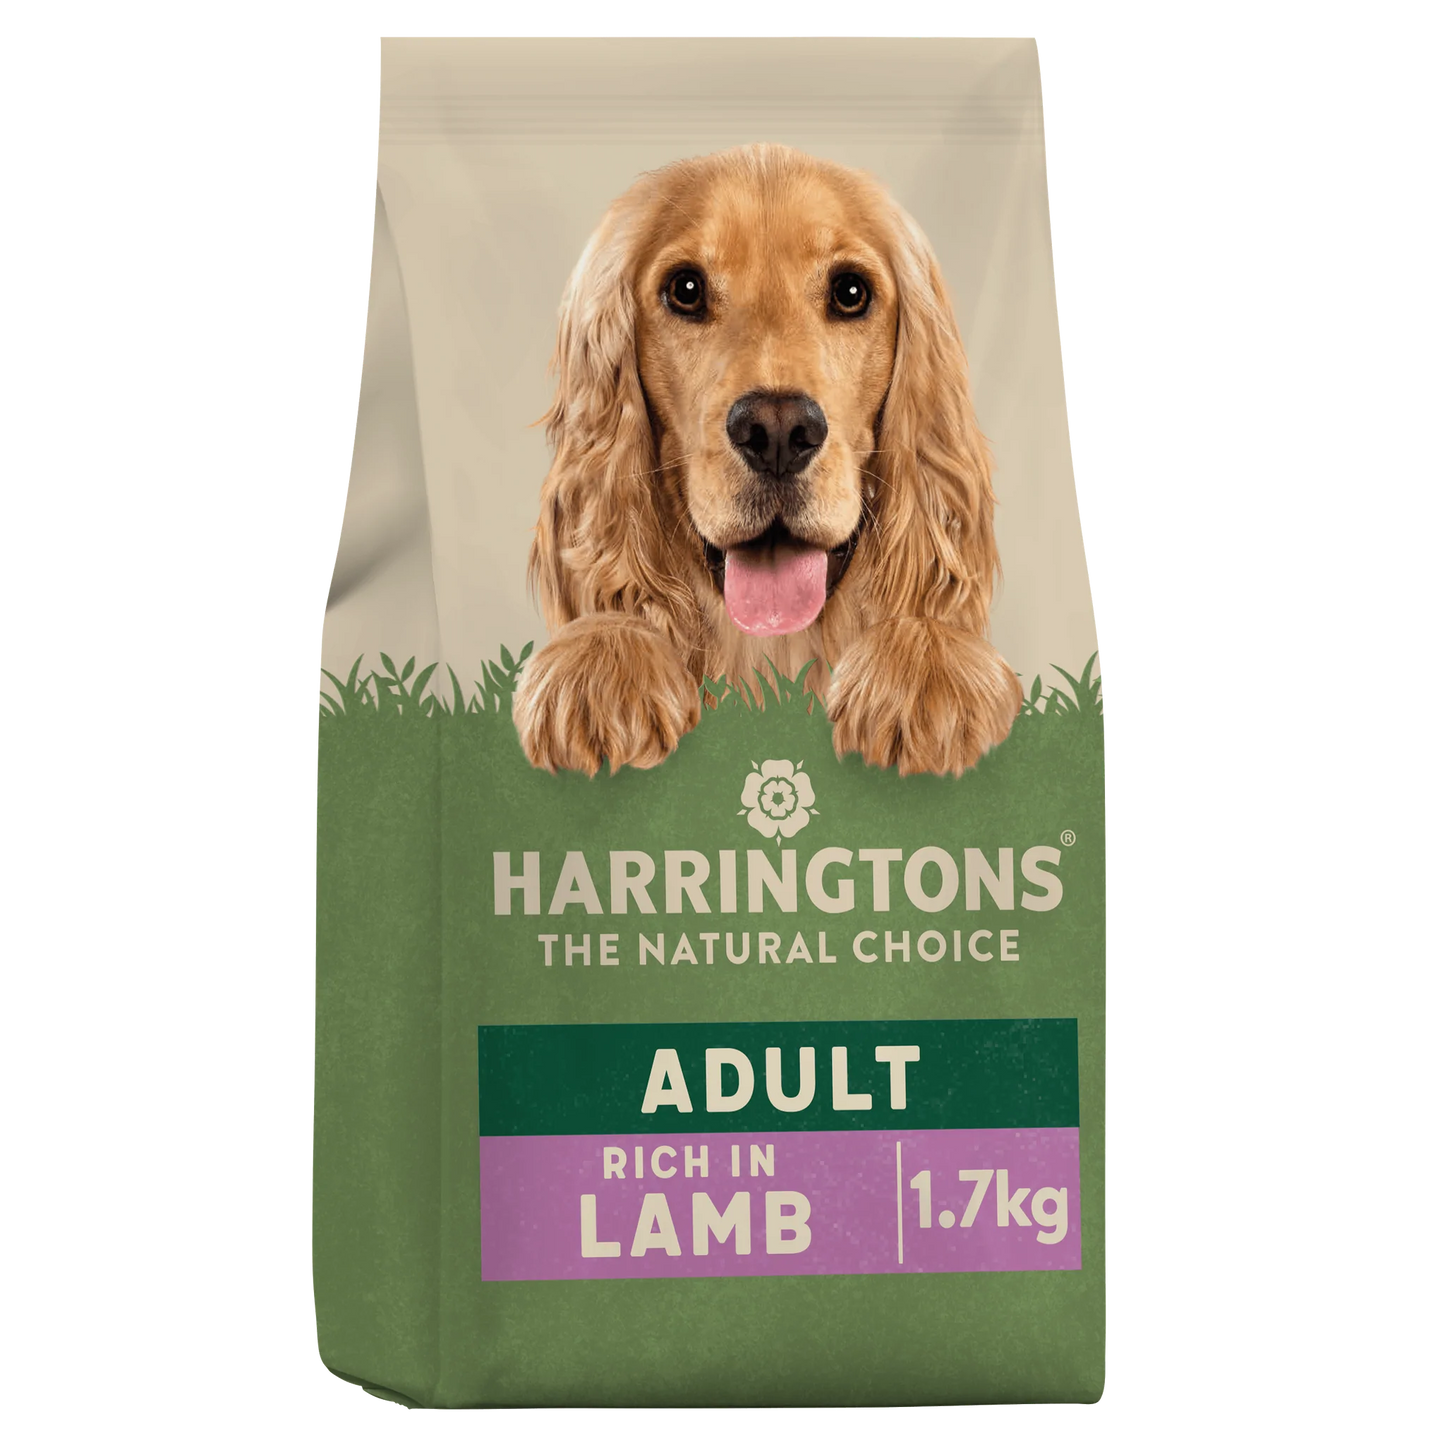 Harringtons Dry Adult Dog Food Lamb 1.7kg